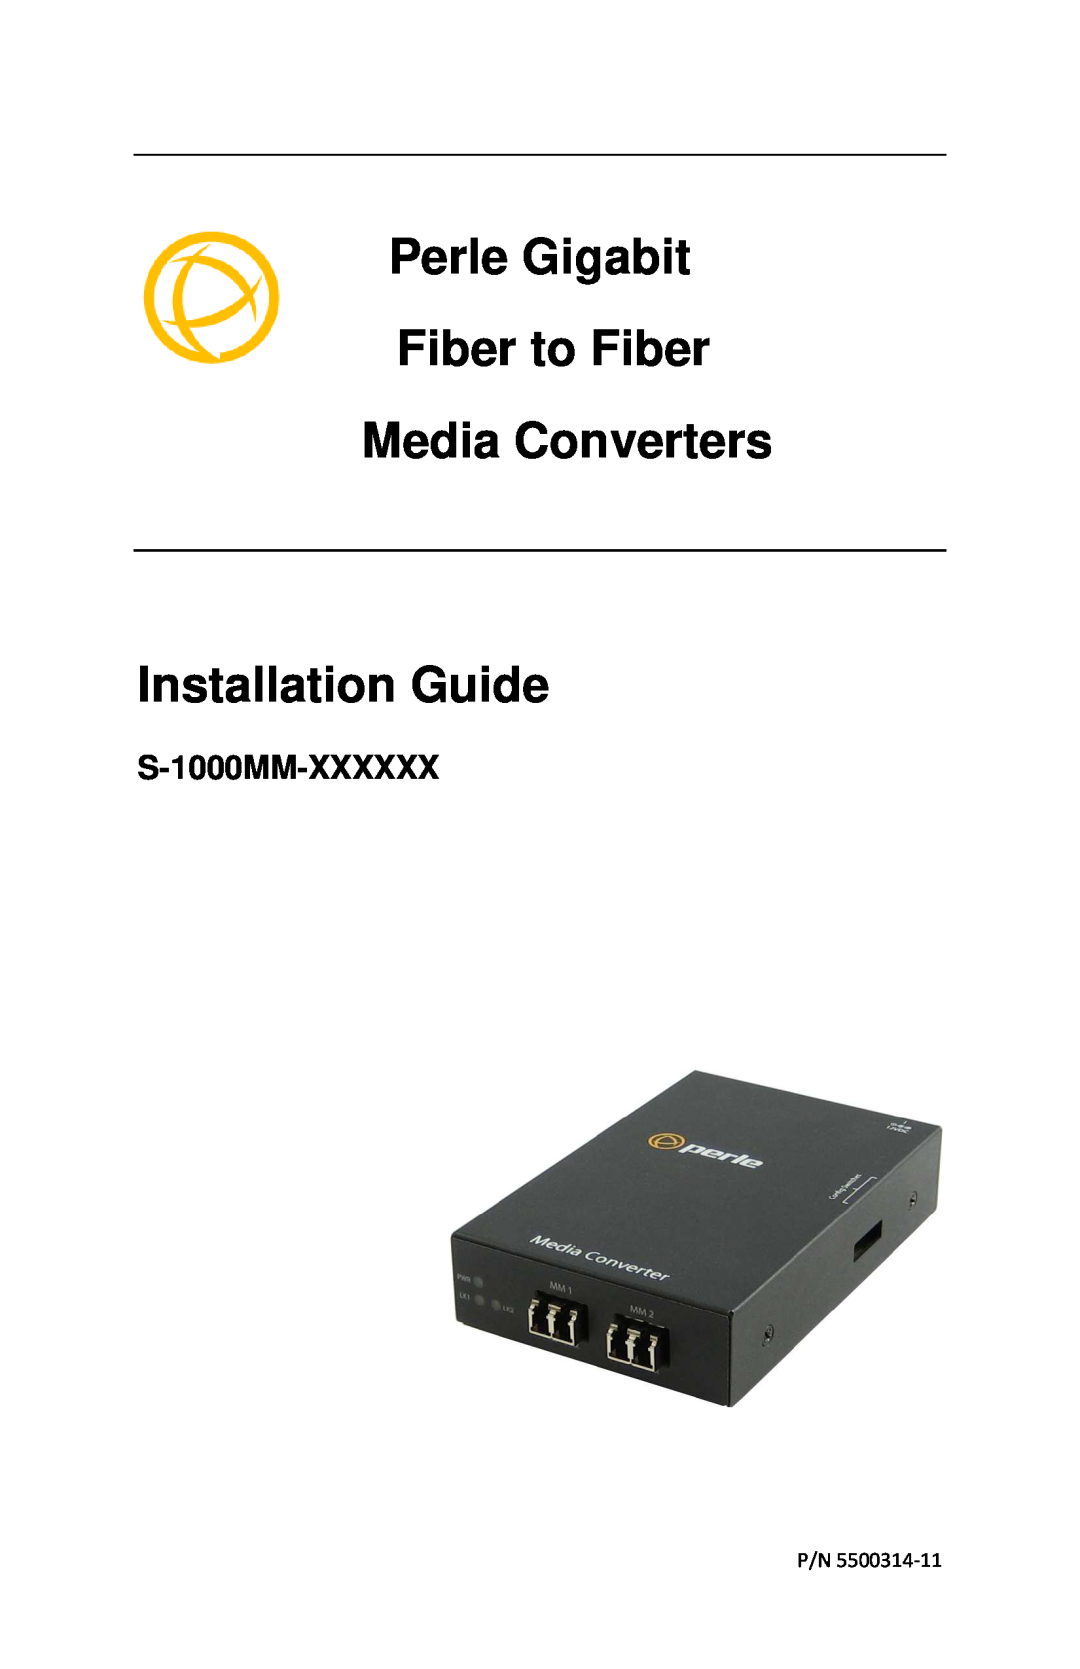 Perle Systems S-1000MM-XXXXXX manual Perle Gigabit Fiber to Fiber Media Converters Installation Guide 